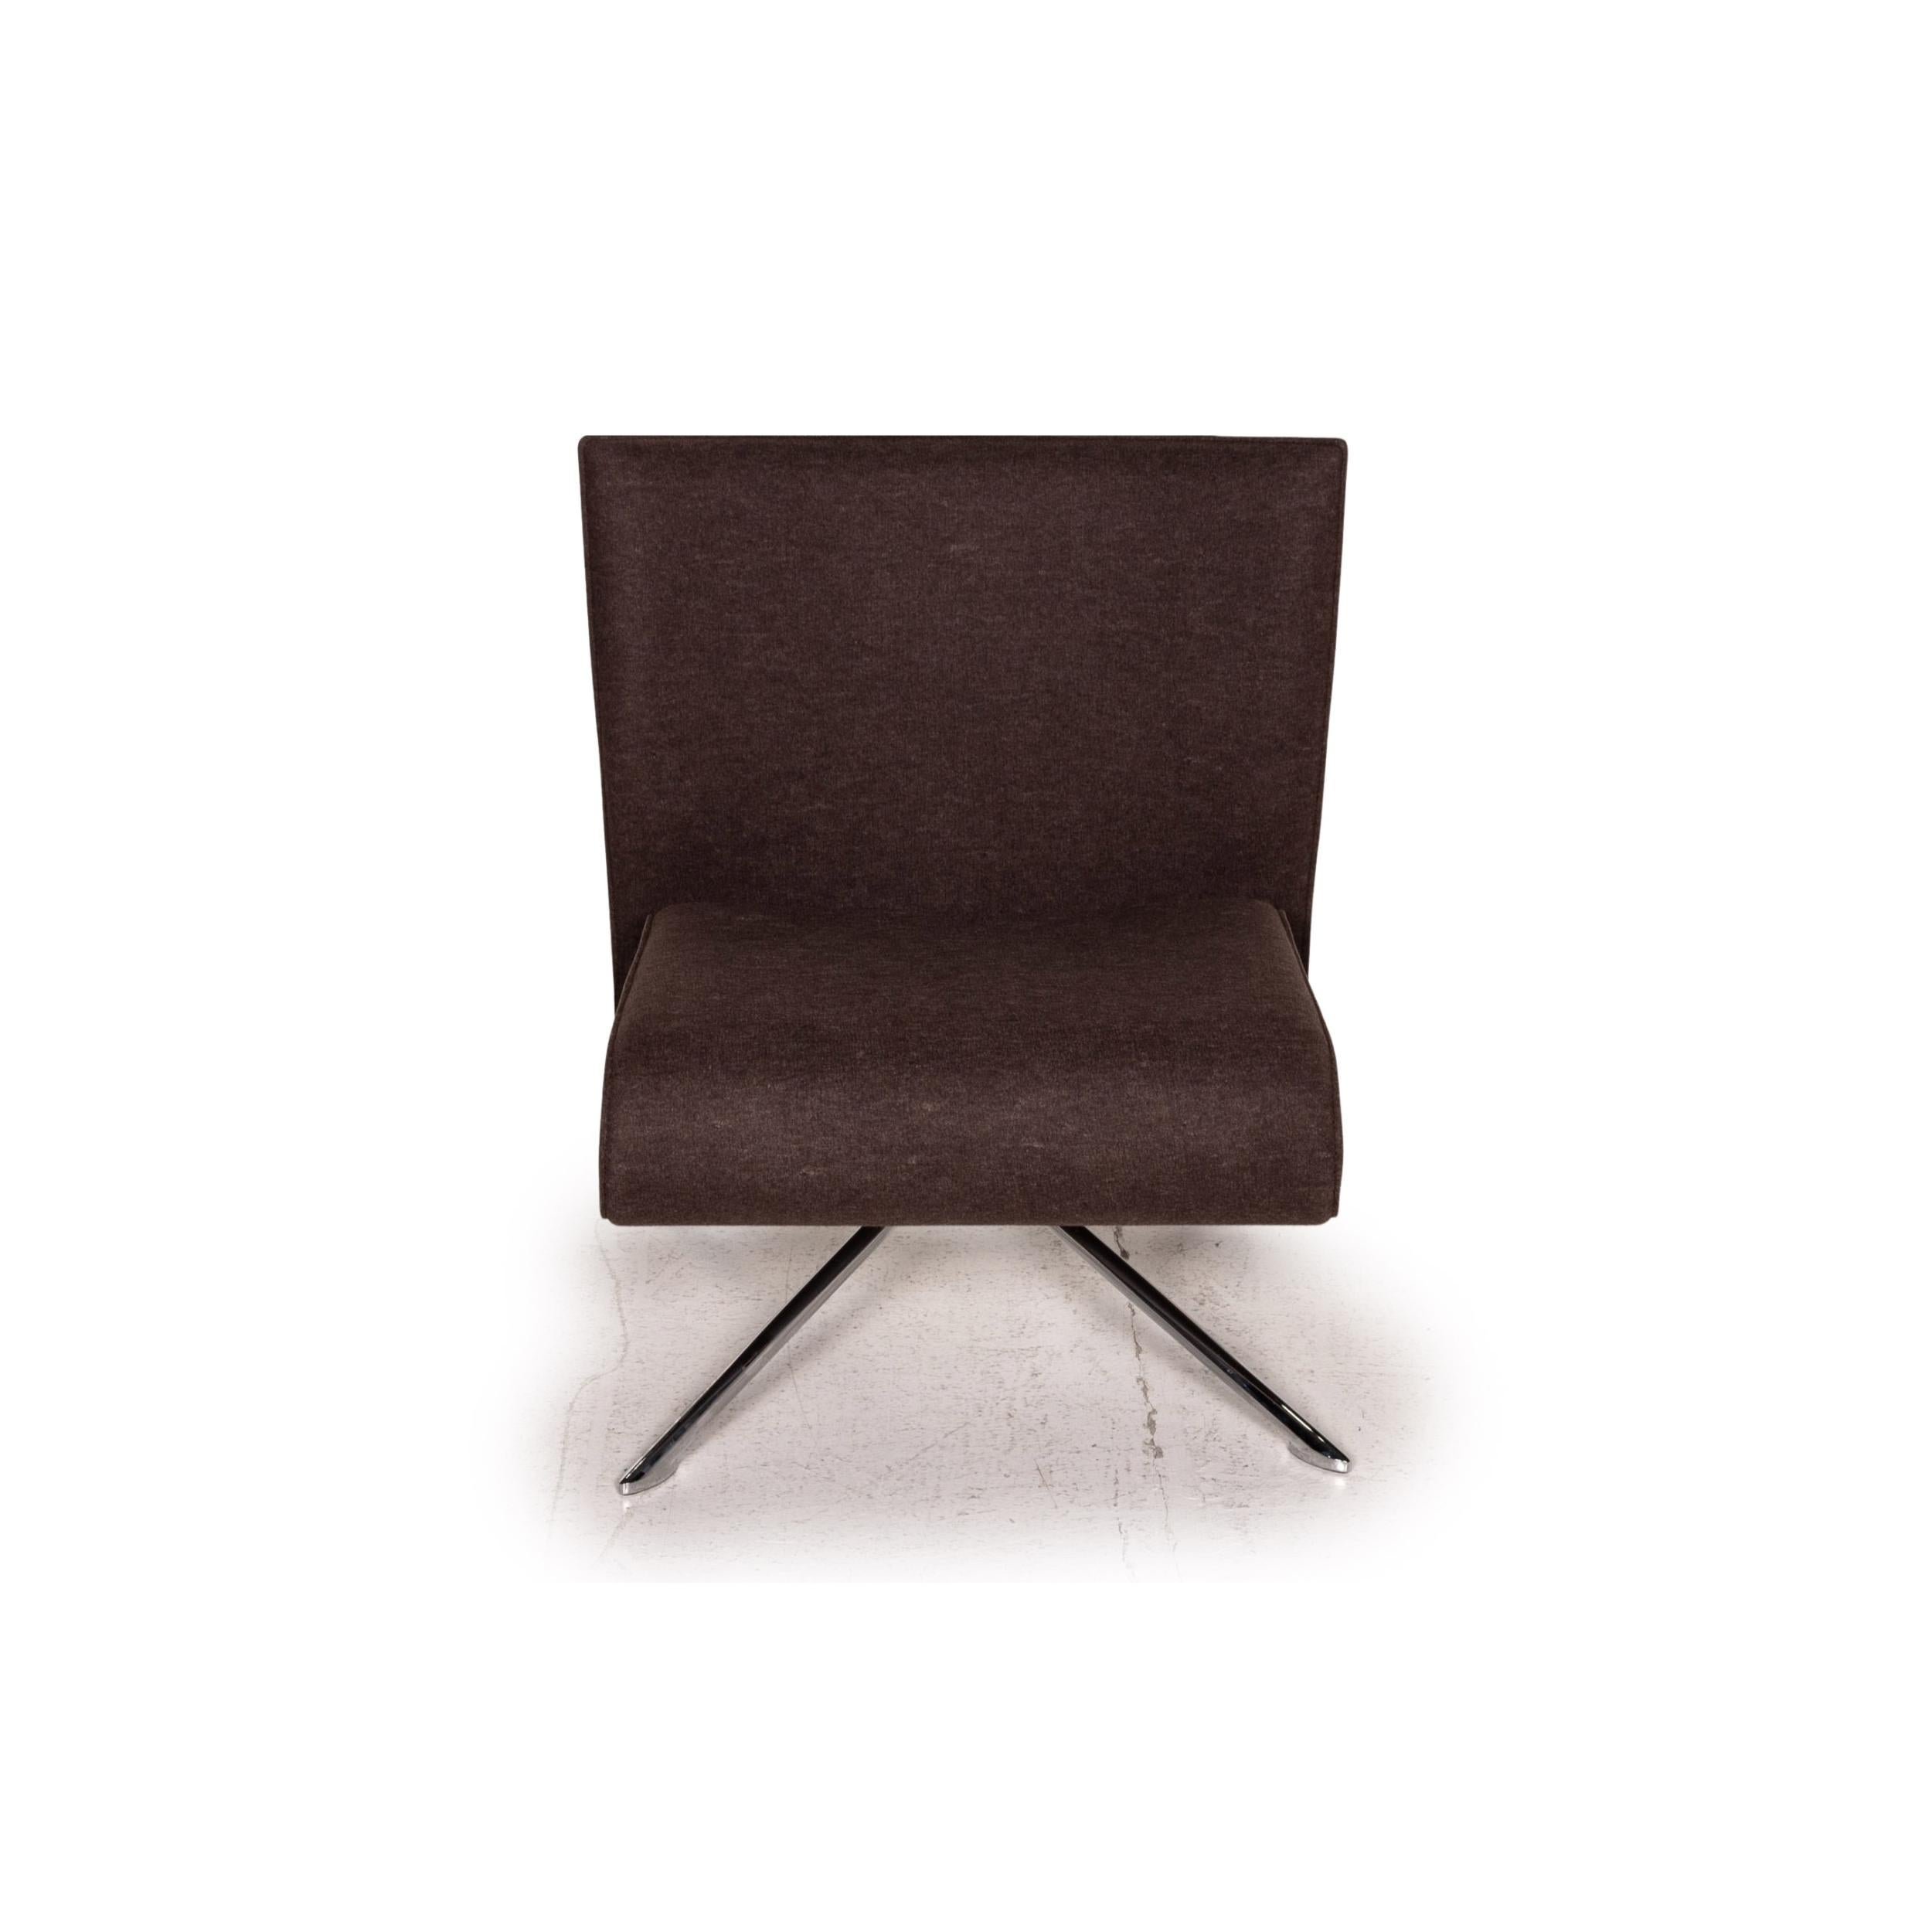 Contemporary HOB Easychair by VERTIJET for COR Designer Armchair, Felt Fabric, Brown, Molded